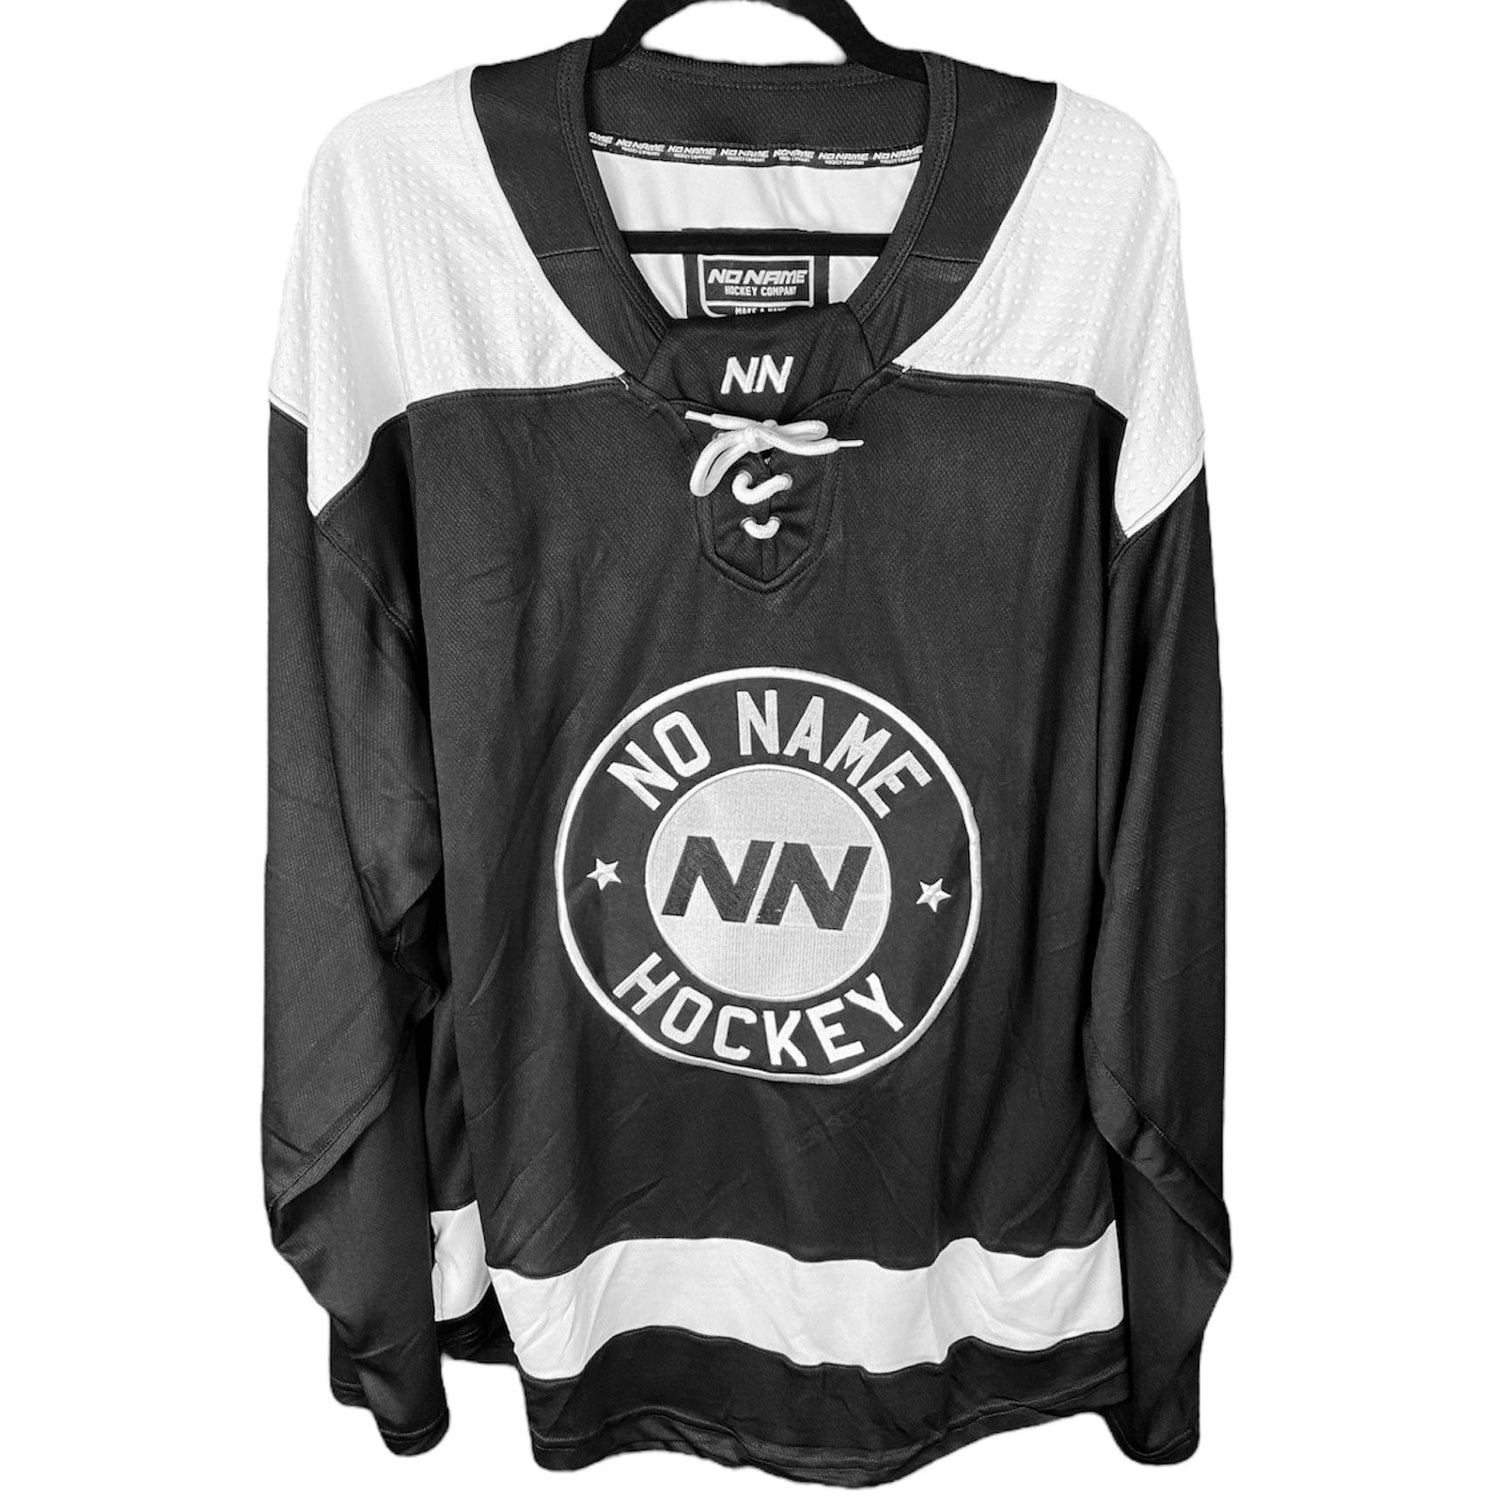 No Name Hockey Ltd. jersey Black Adult M NN Black Practice Jersey